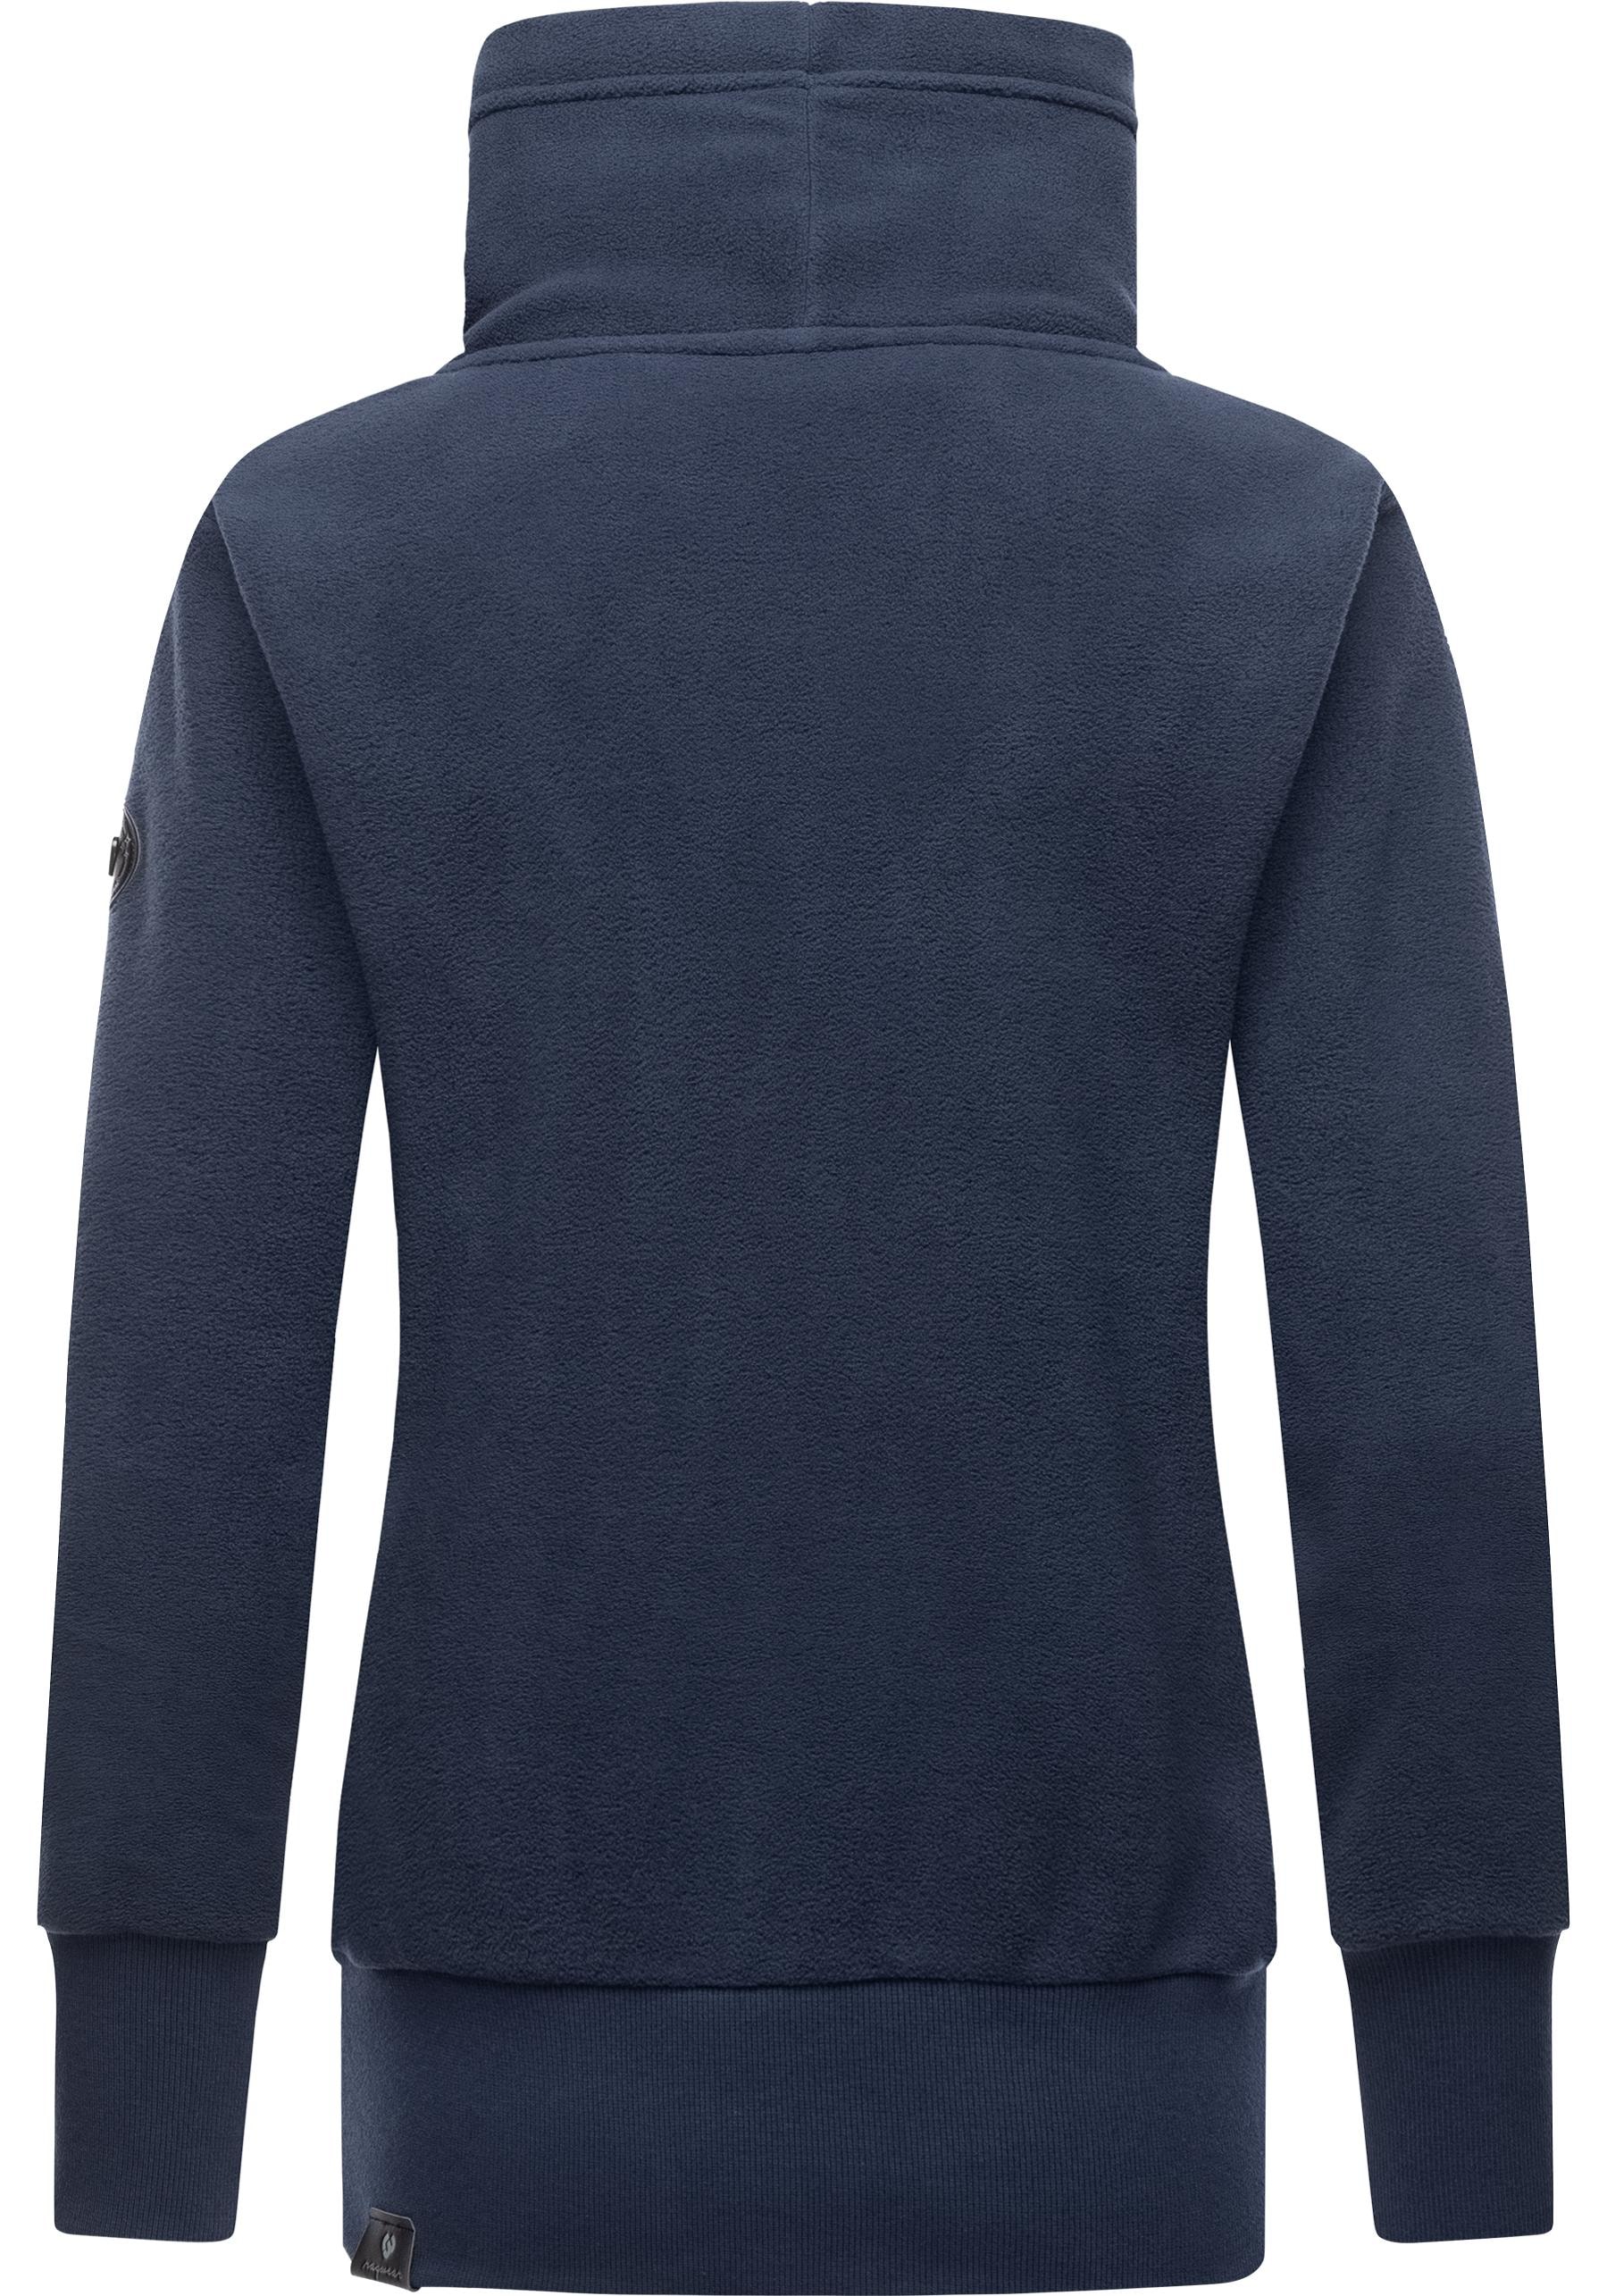 Ragwear Sweatshirt »Neska Fleece«, modischer Longsleeve Fleecepullover mit hohem Kragen